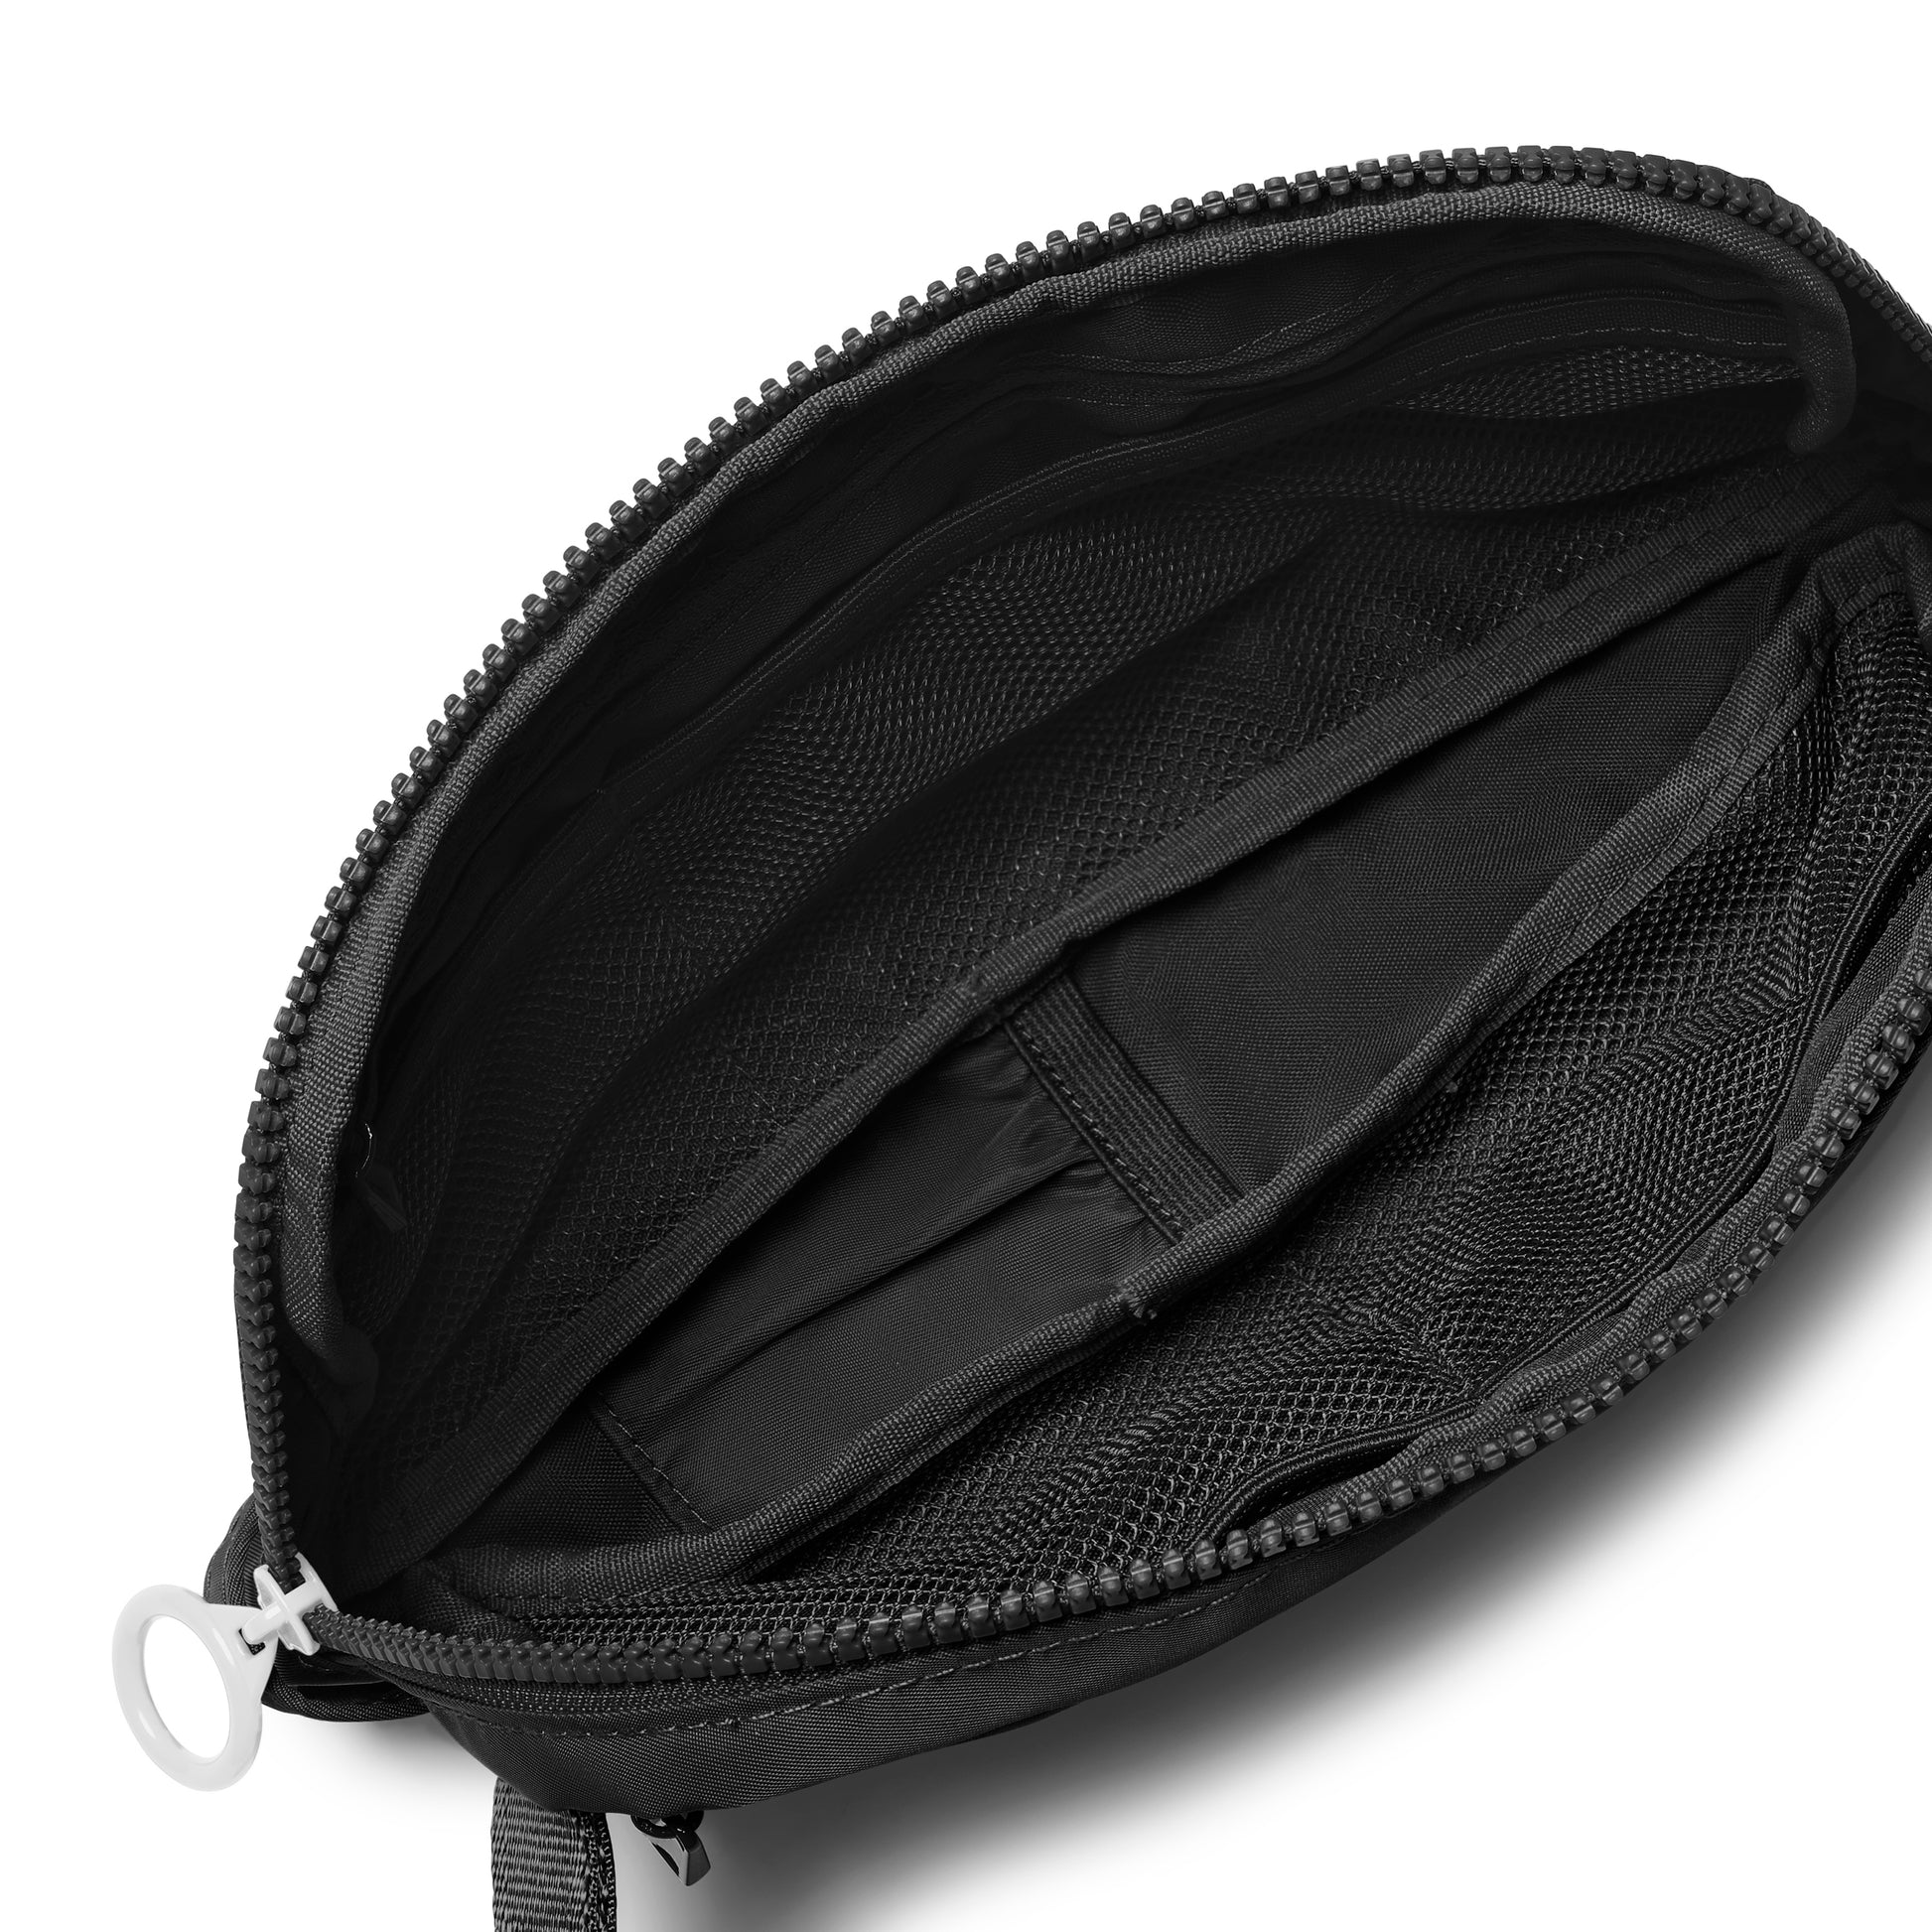 Black and white nurse bag with pocket for scissors 